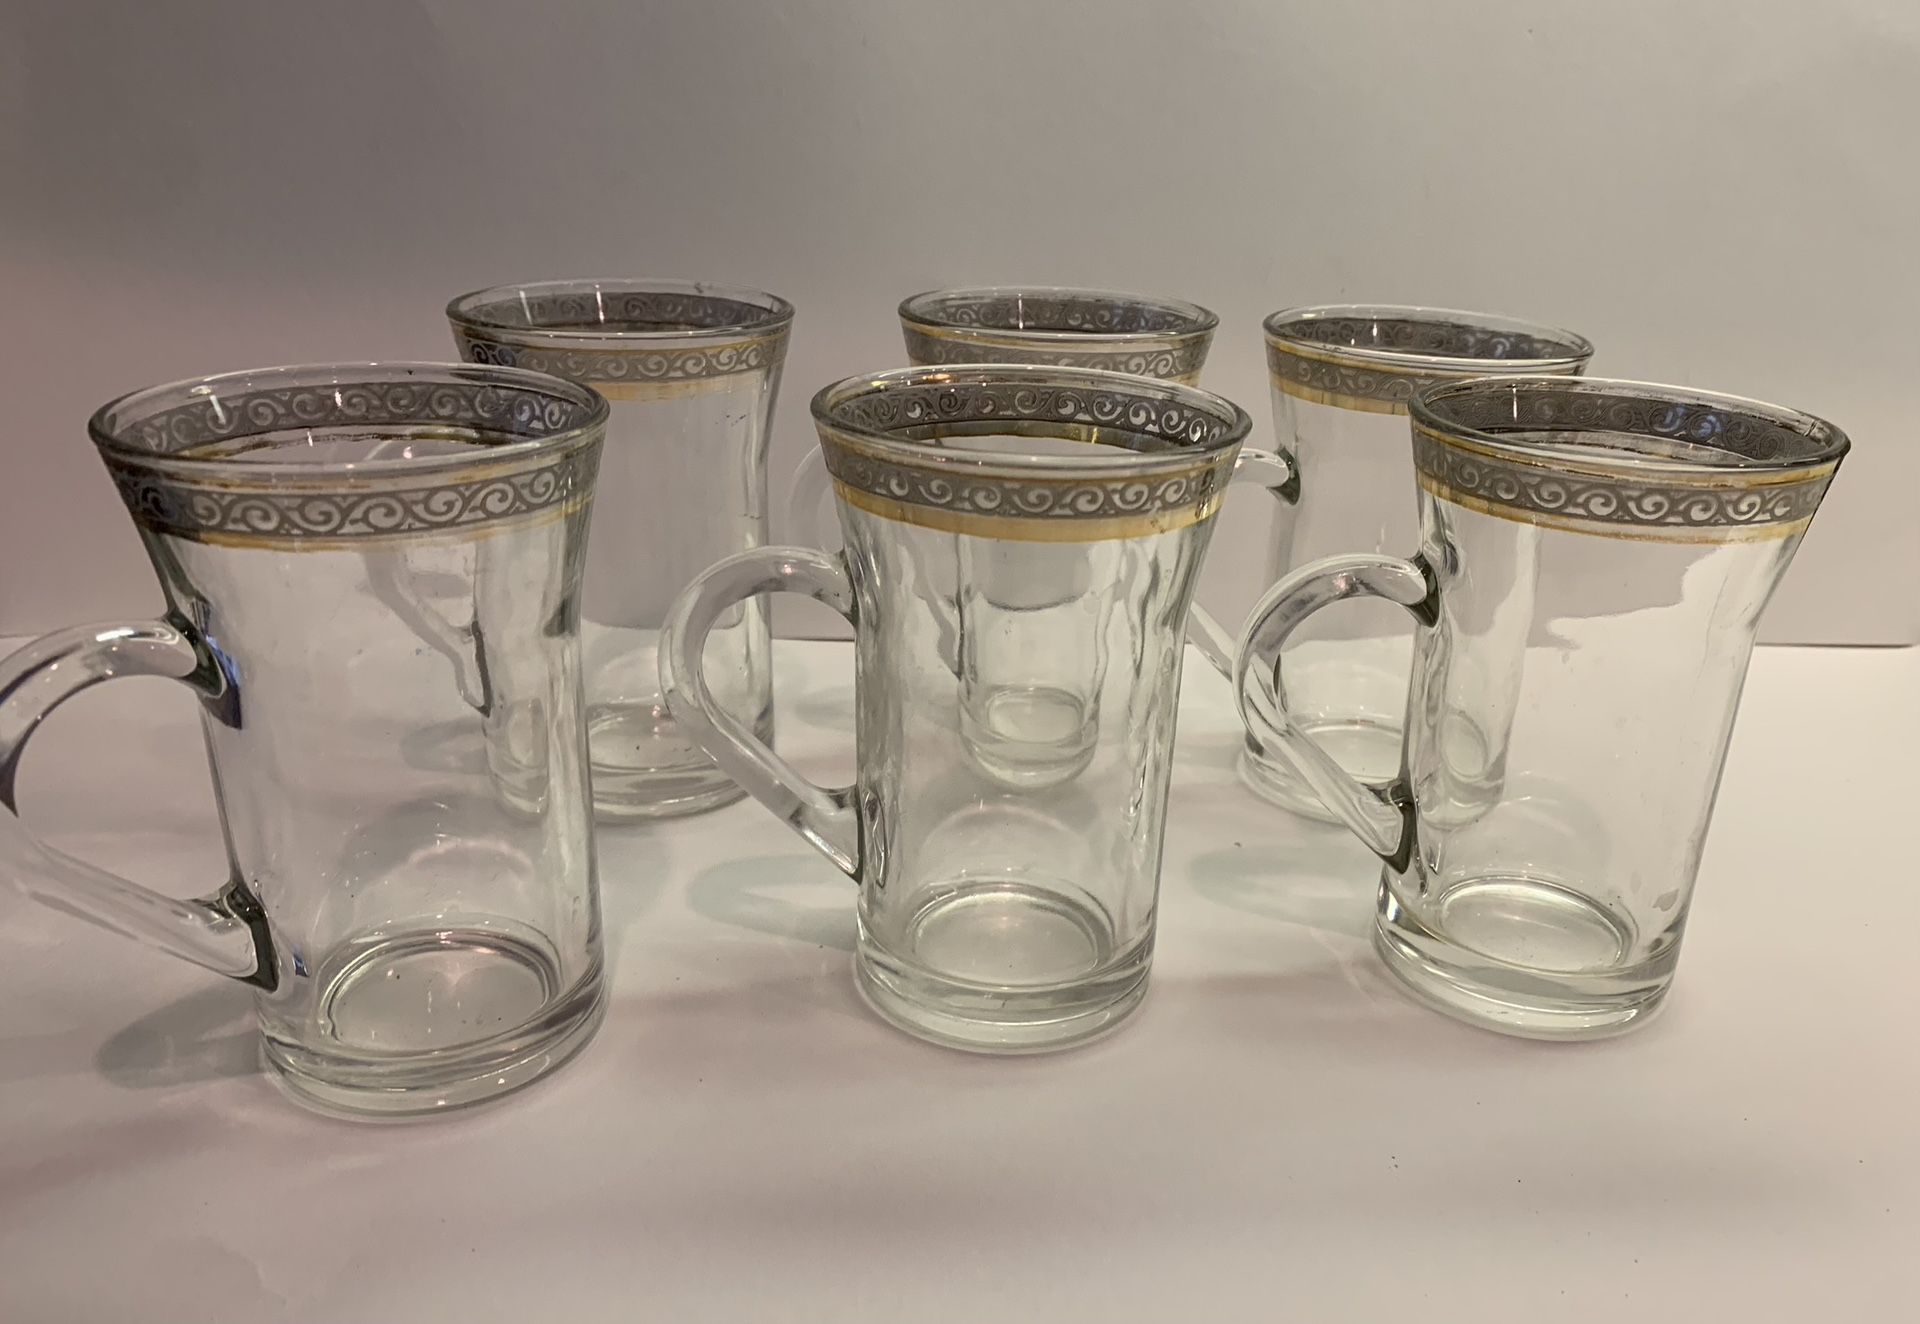 Set Of 6 Tea/Coffee Glasses, Gold Rim Design.  Vintage  